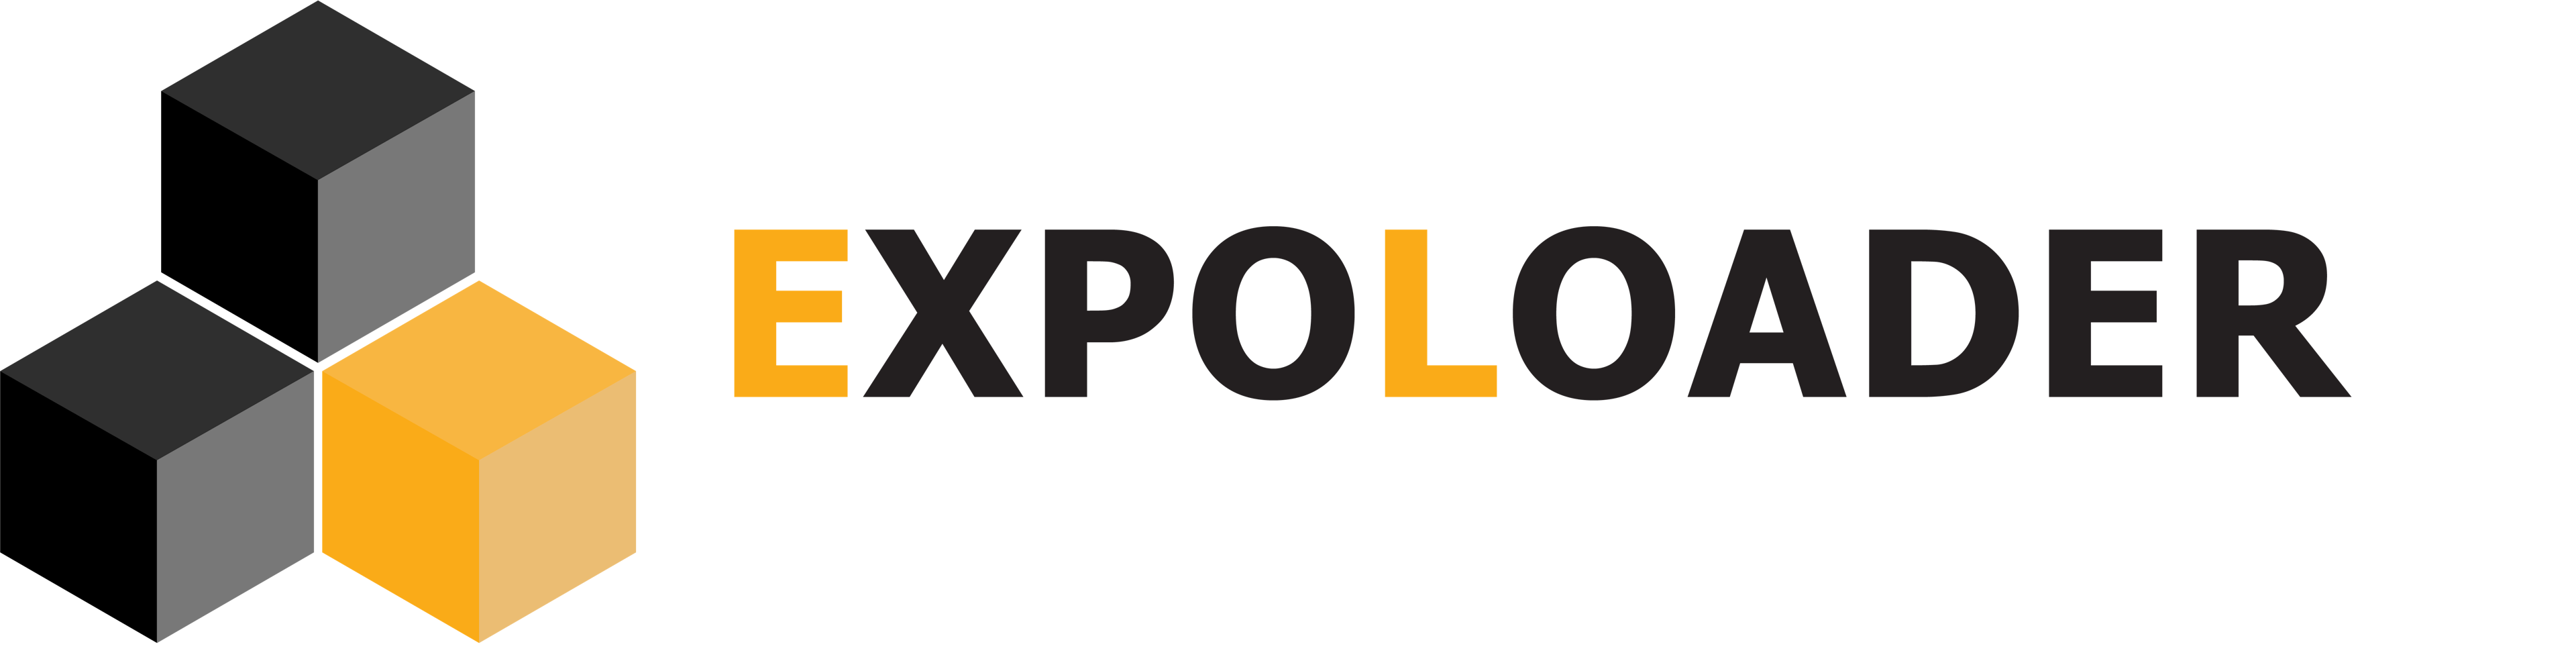 Expoloader Logo